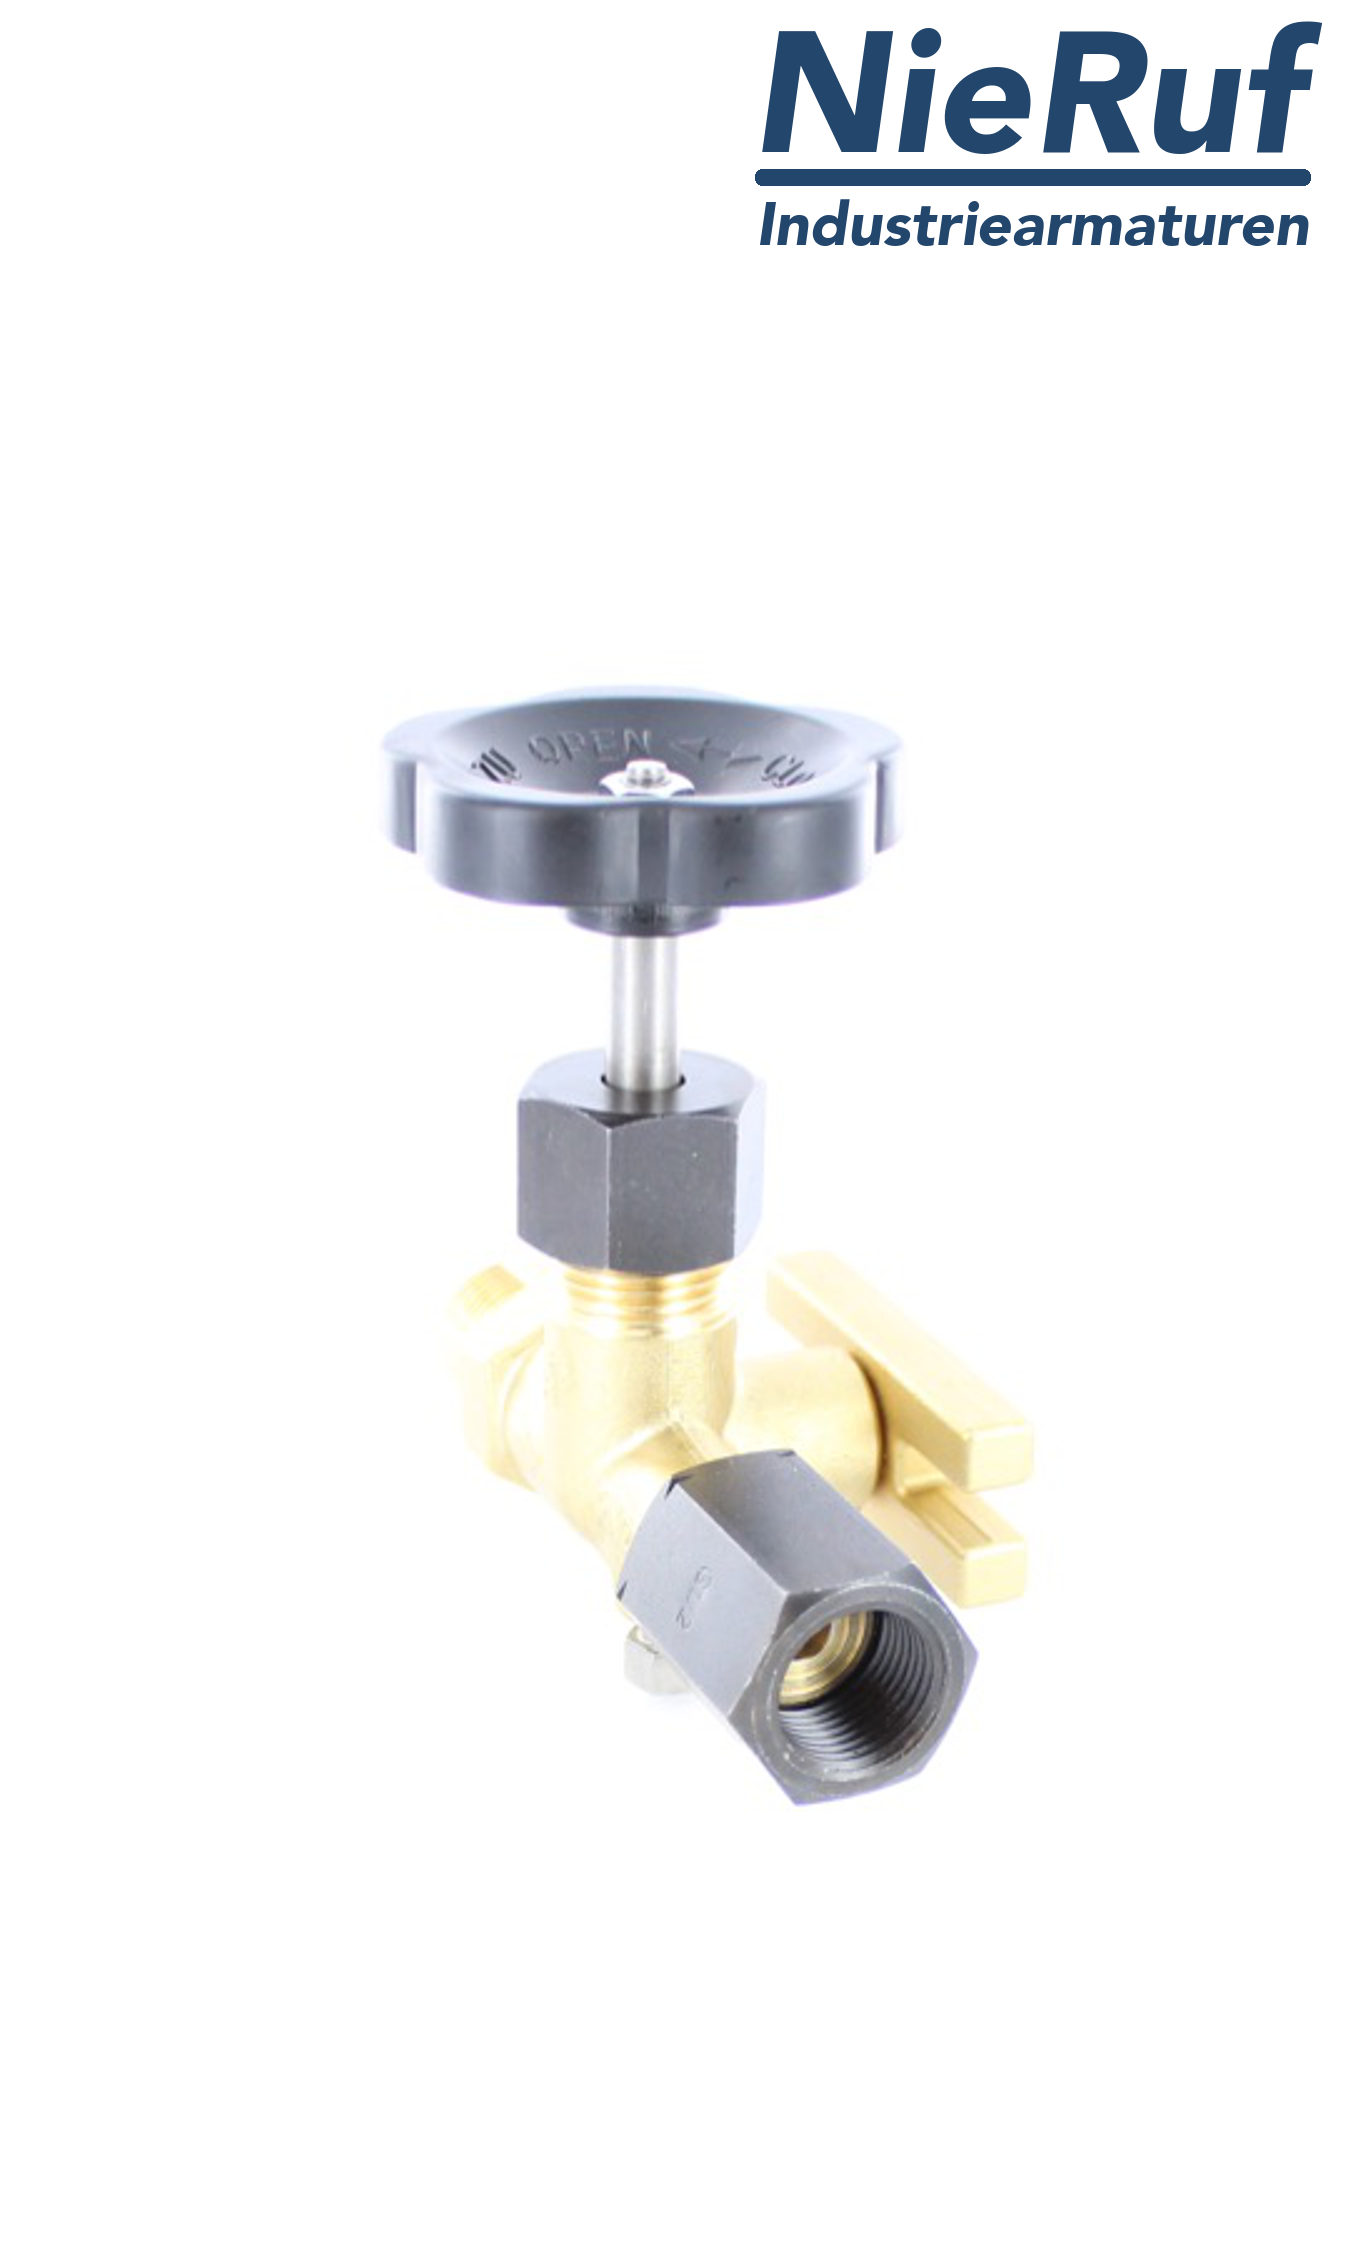 manometer gauge valves male thread x sleeve x test flange 60x25 mm DIN 16271 brass 250 bar